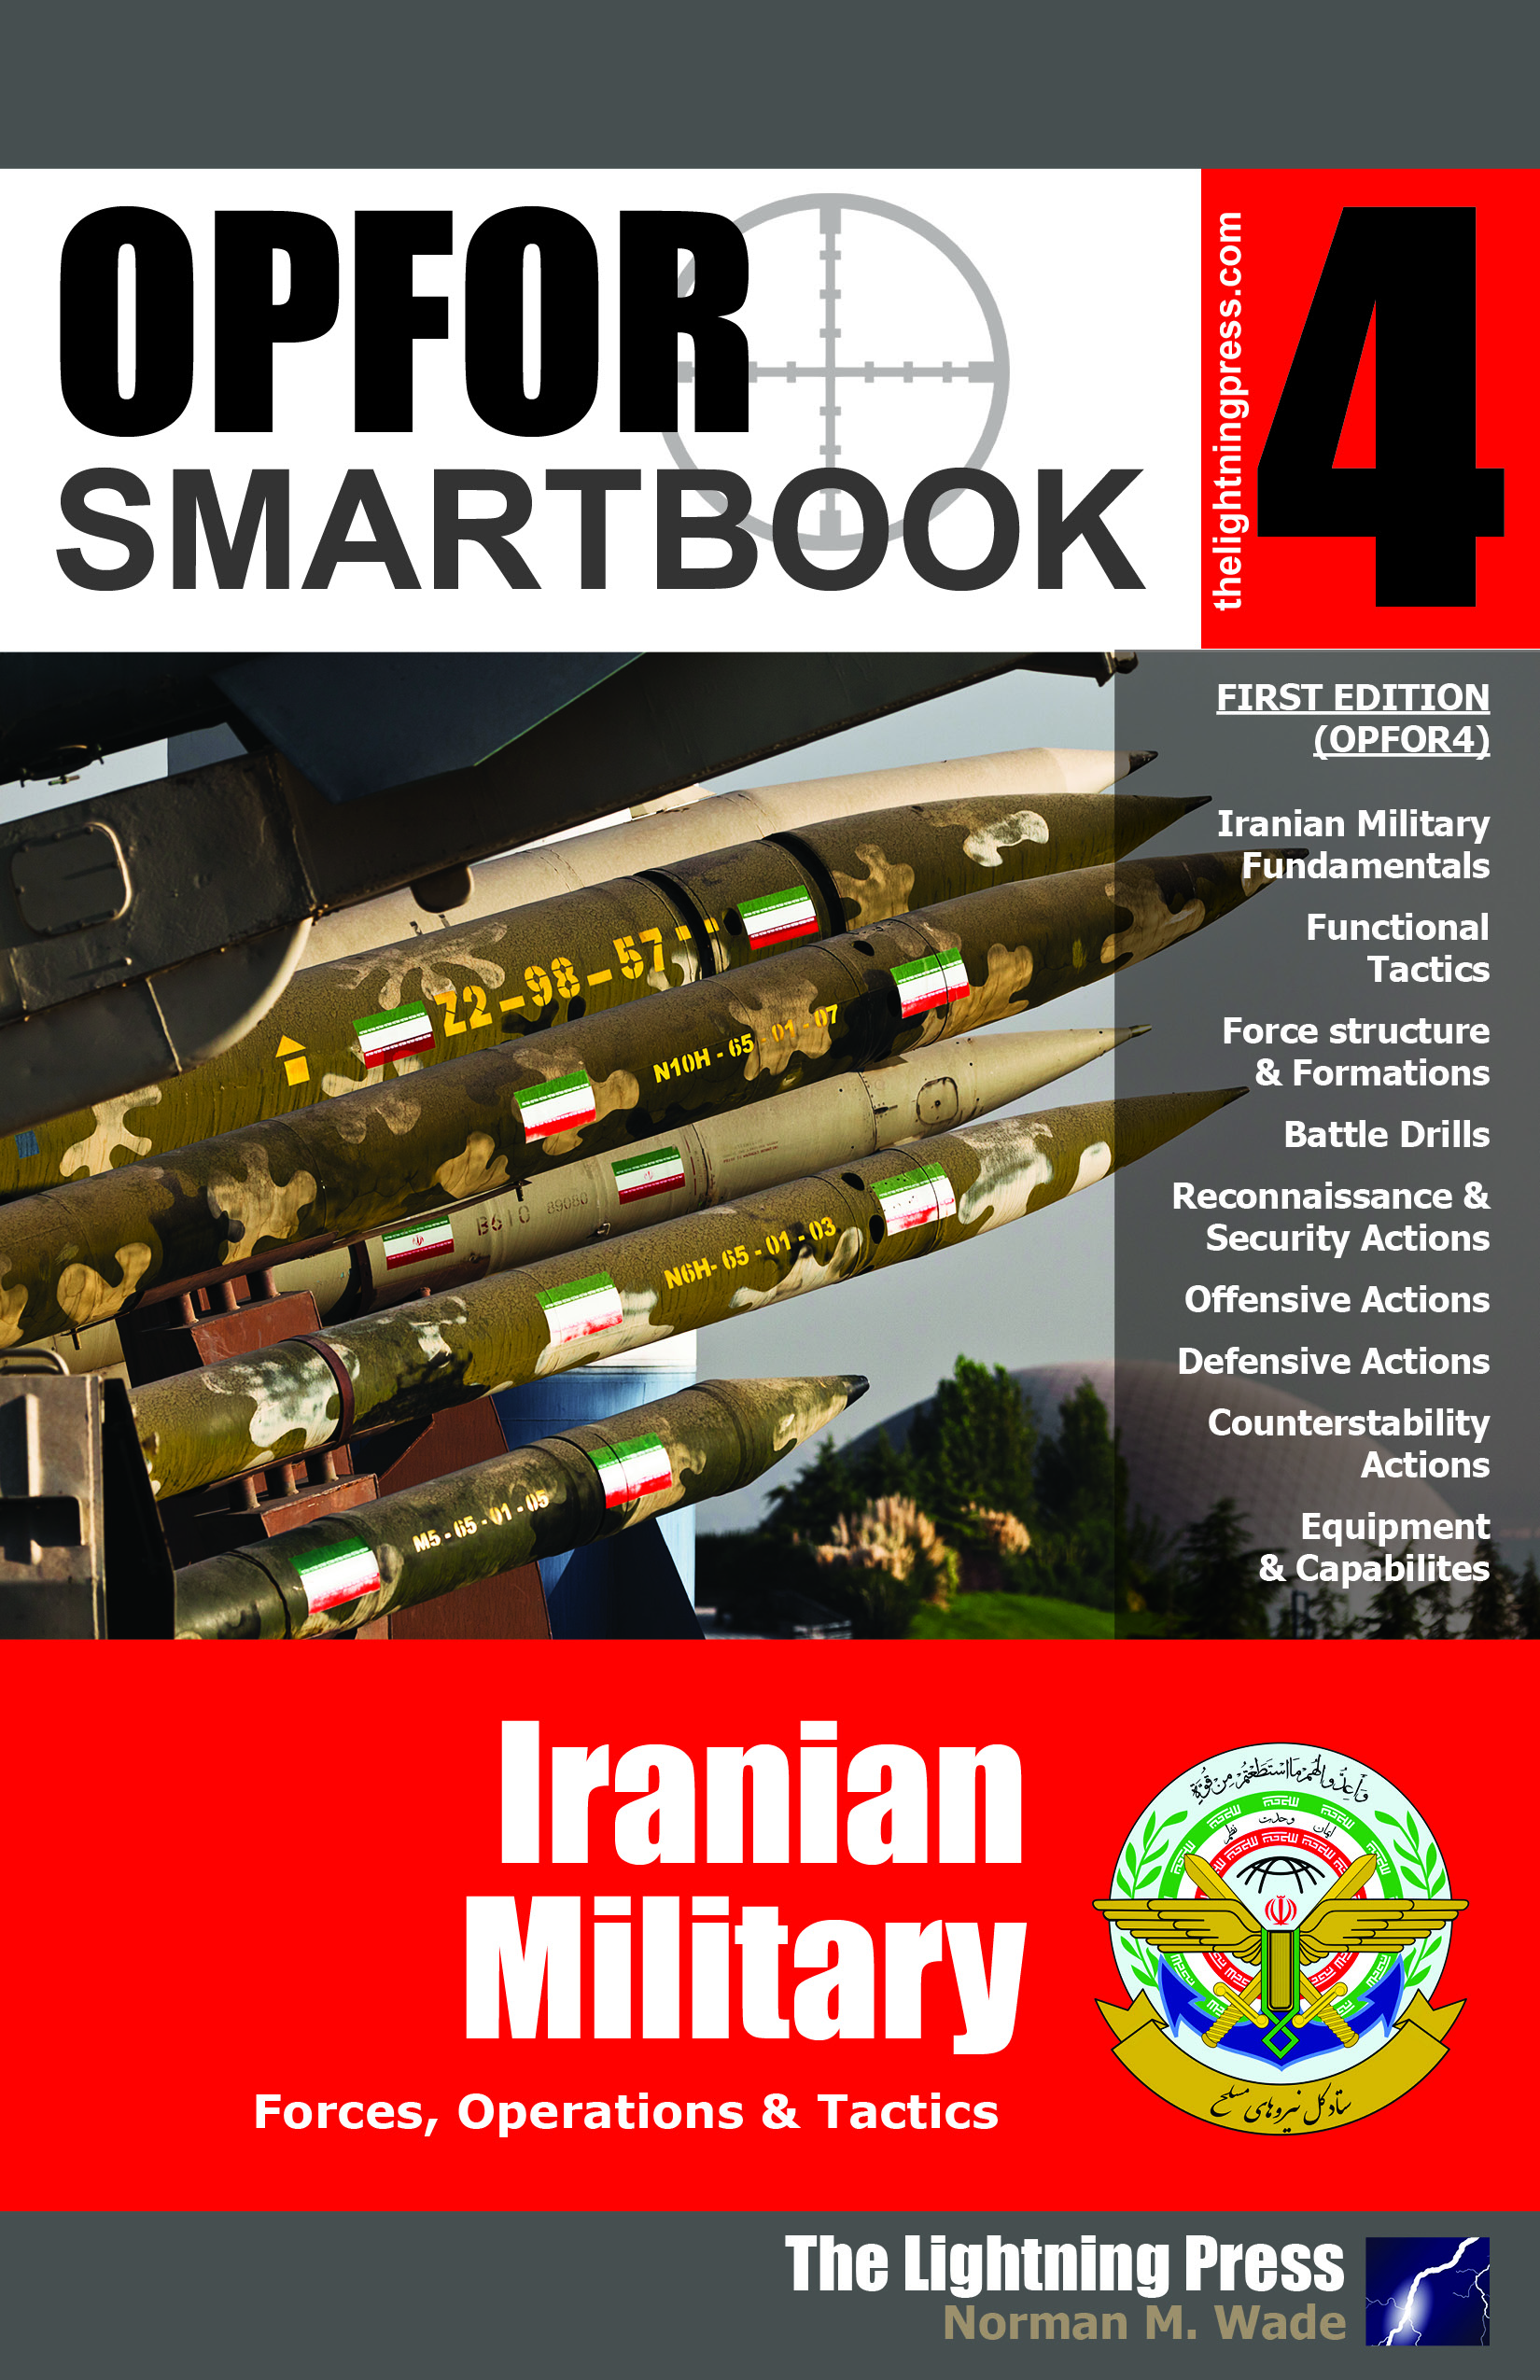 OPFOR SMARTbook 4 - Iranian Military